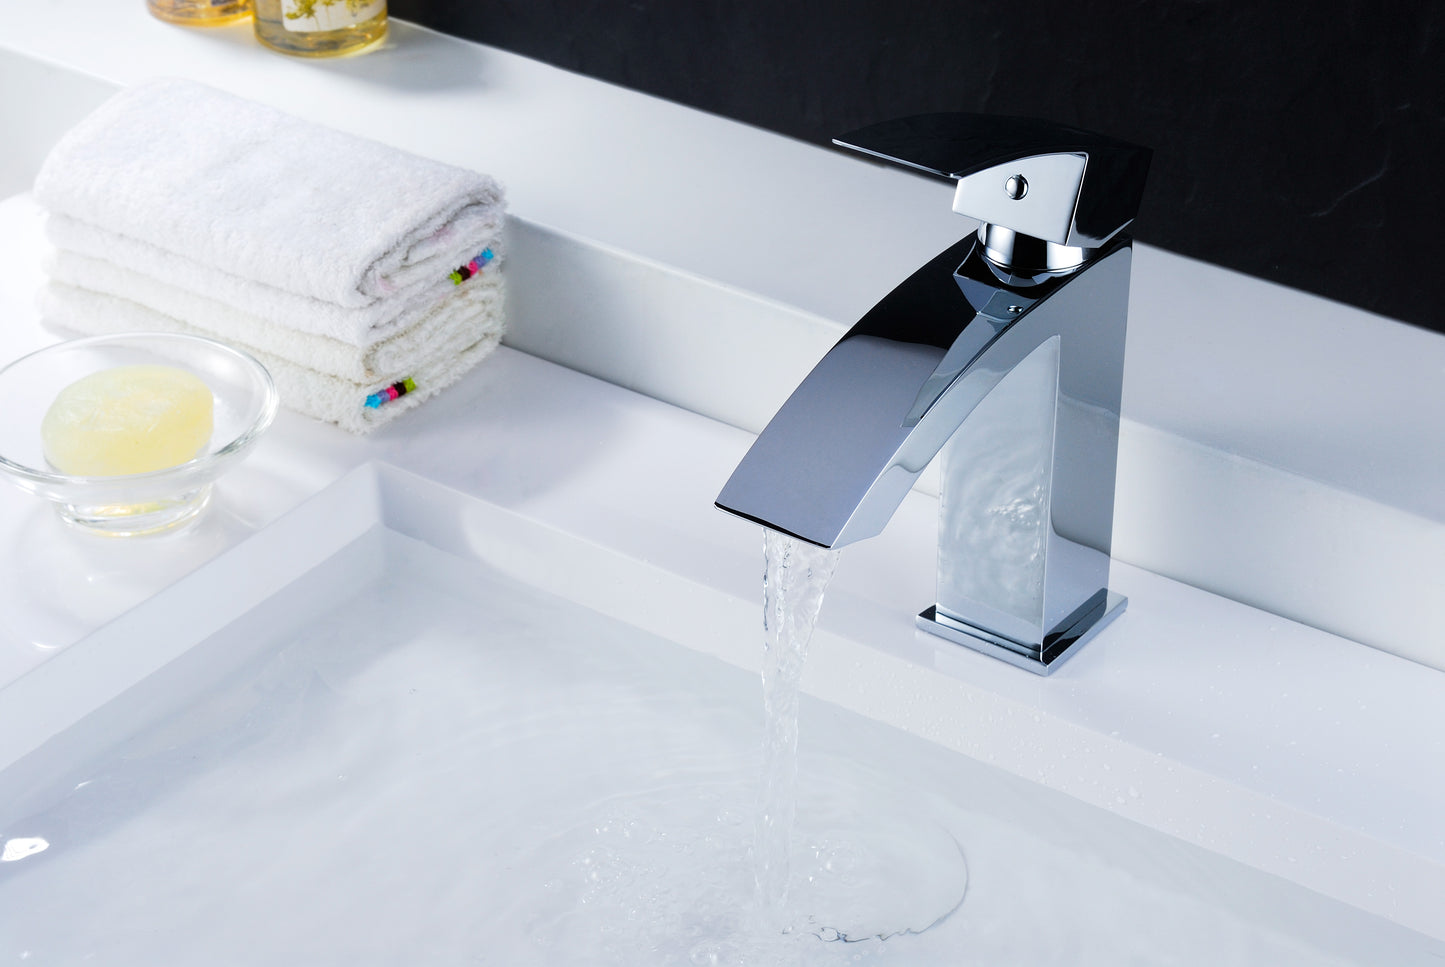 L-AZ037 - Revere Series Single Hole Single-Handle Low-Arc Bathroom Faucet in Polished Chrome